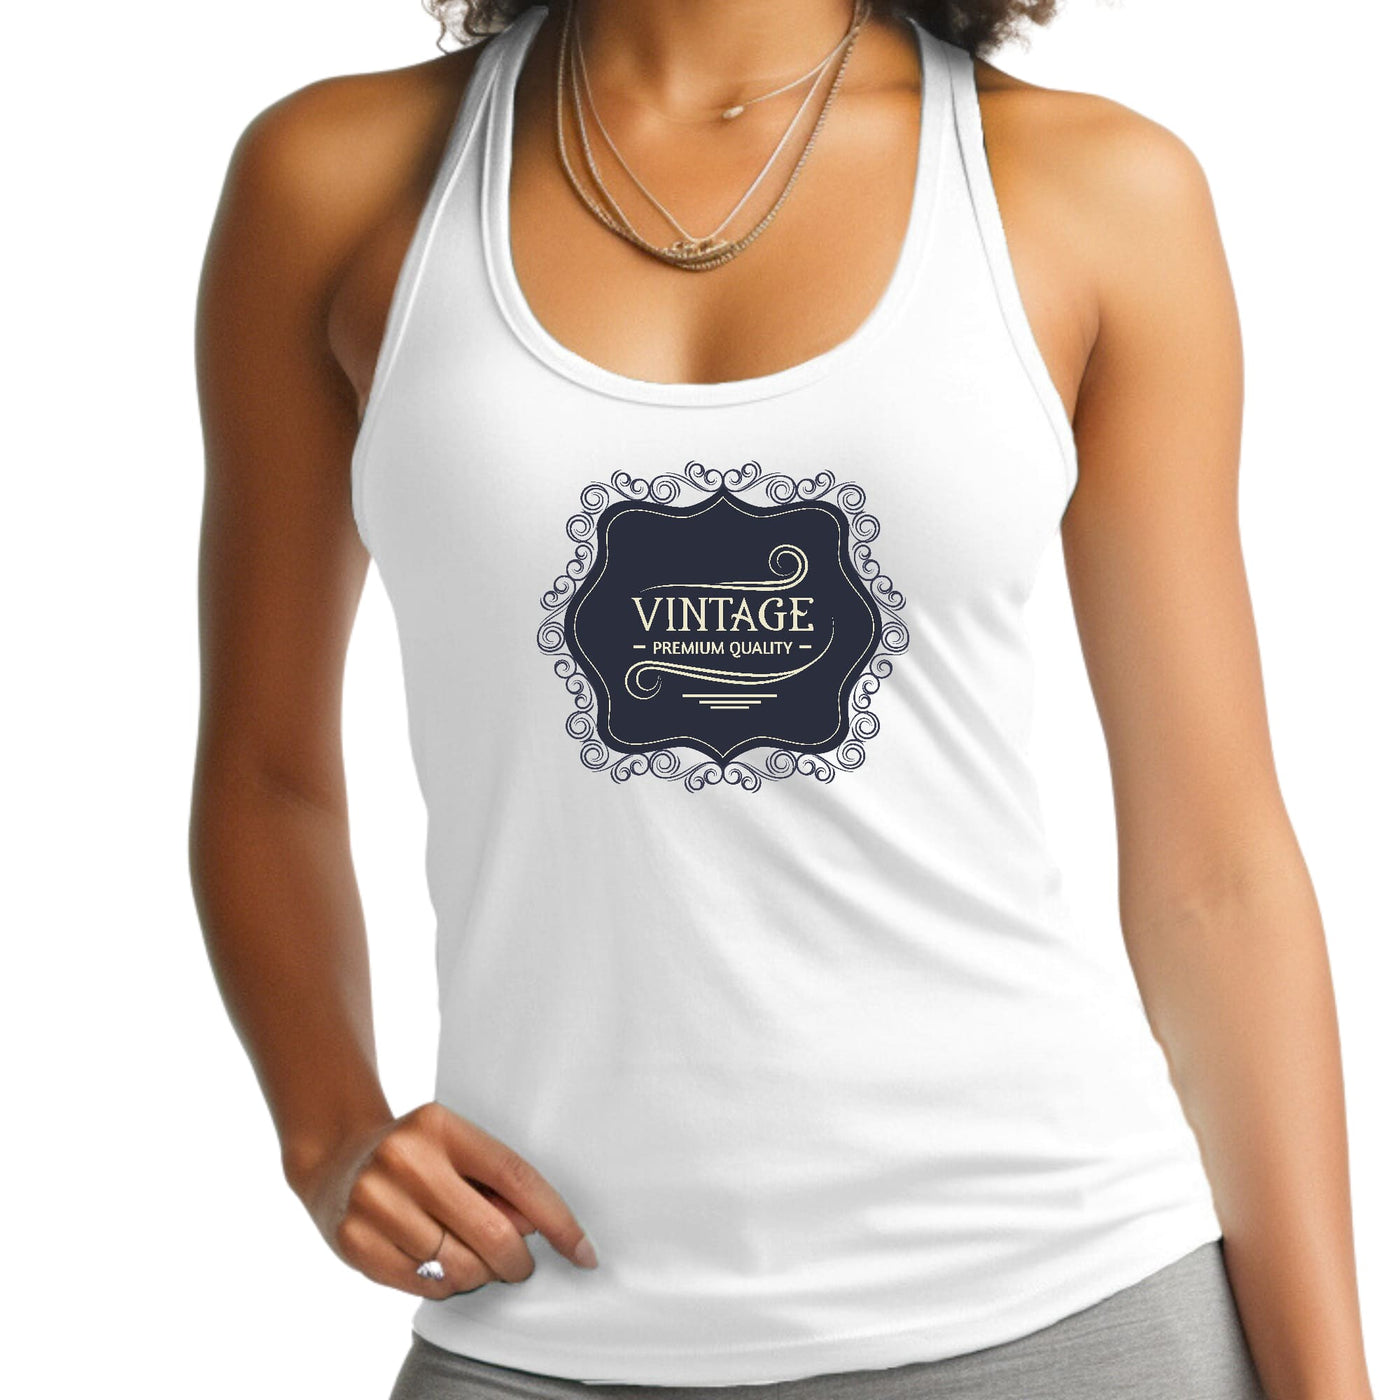 Womens Tank Top Fitness T - shirt Vintage Premium Quality Black Beige - Tops